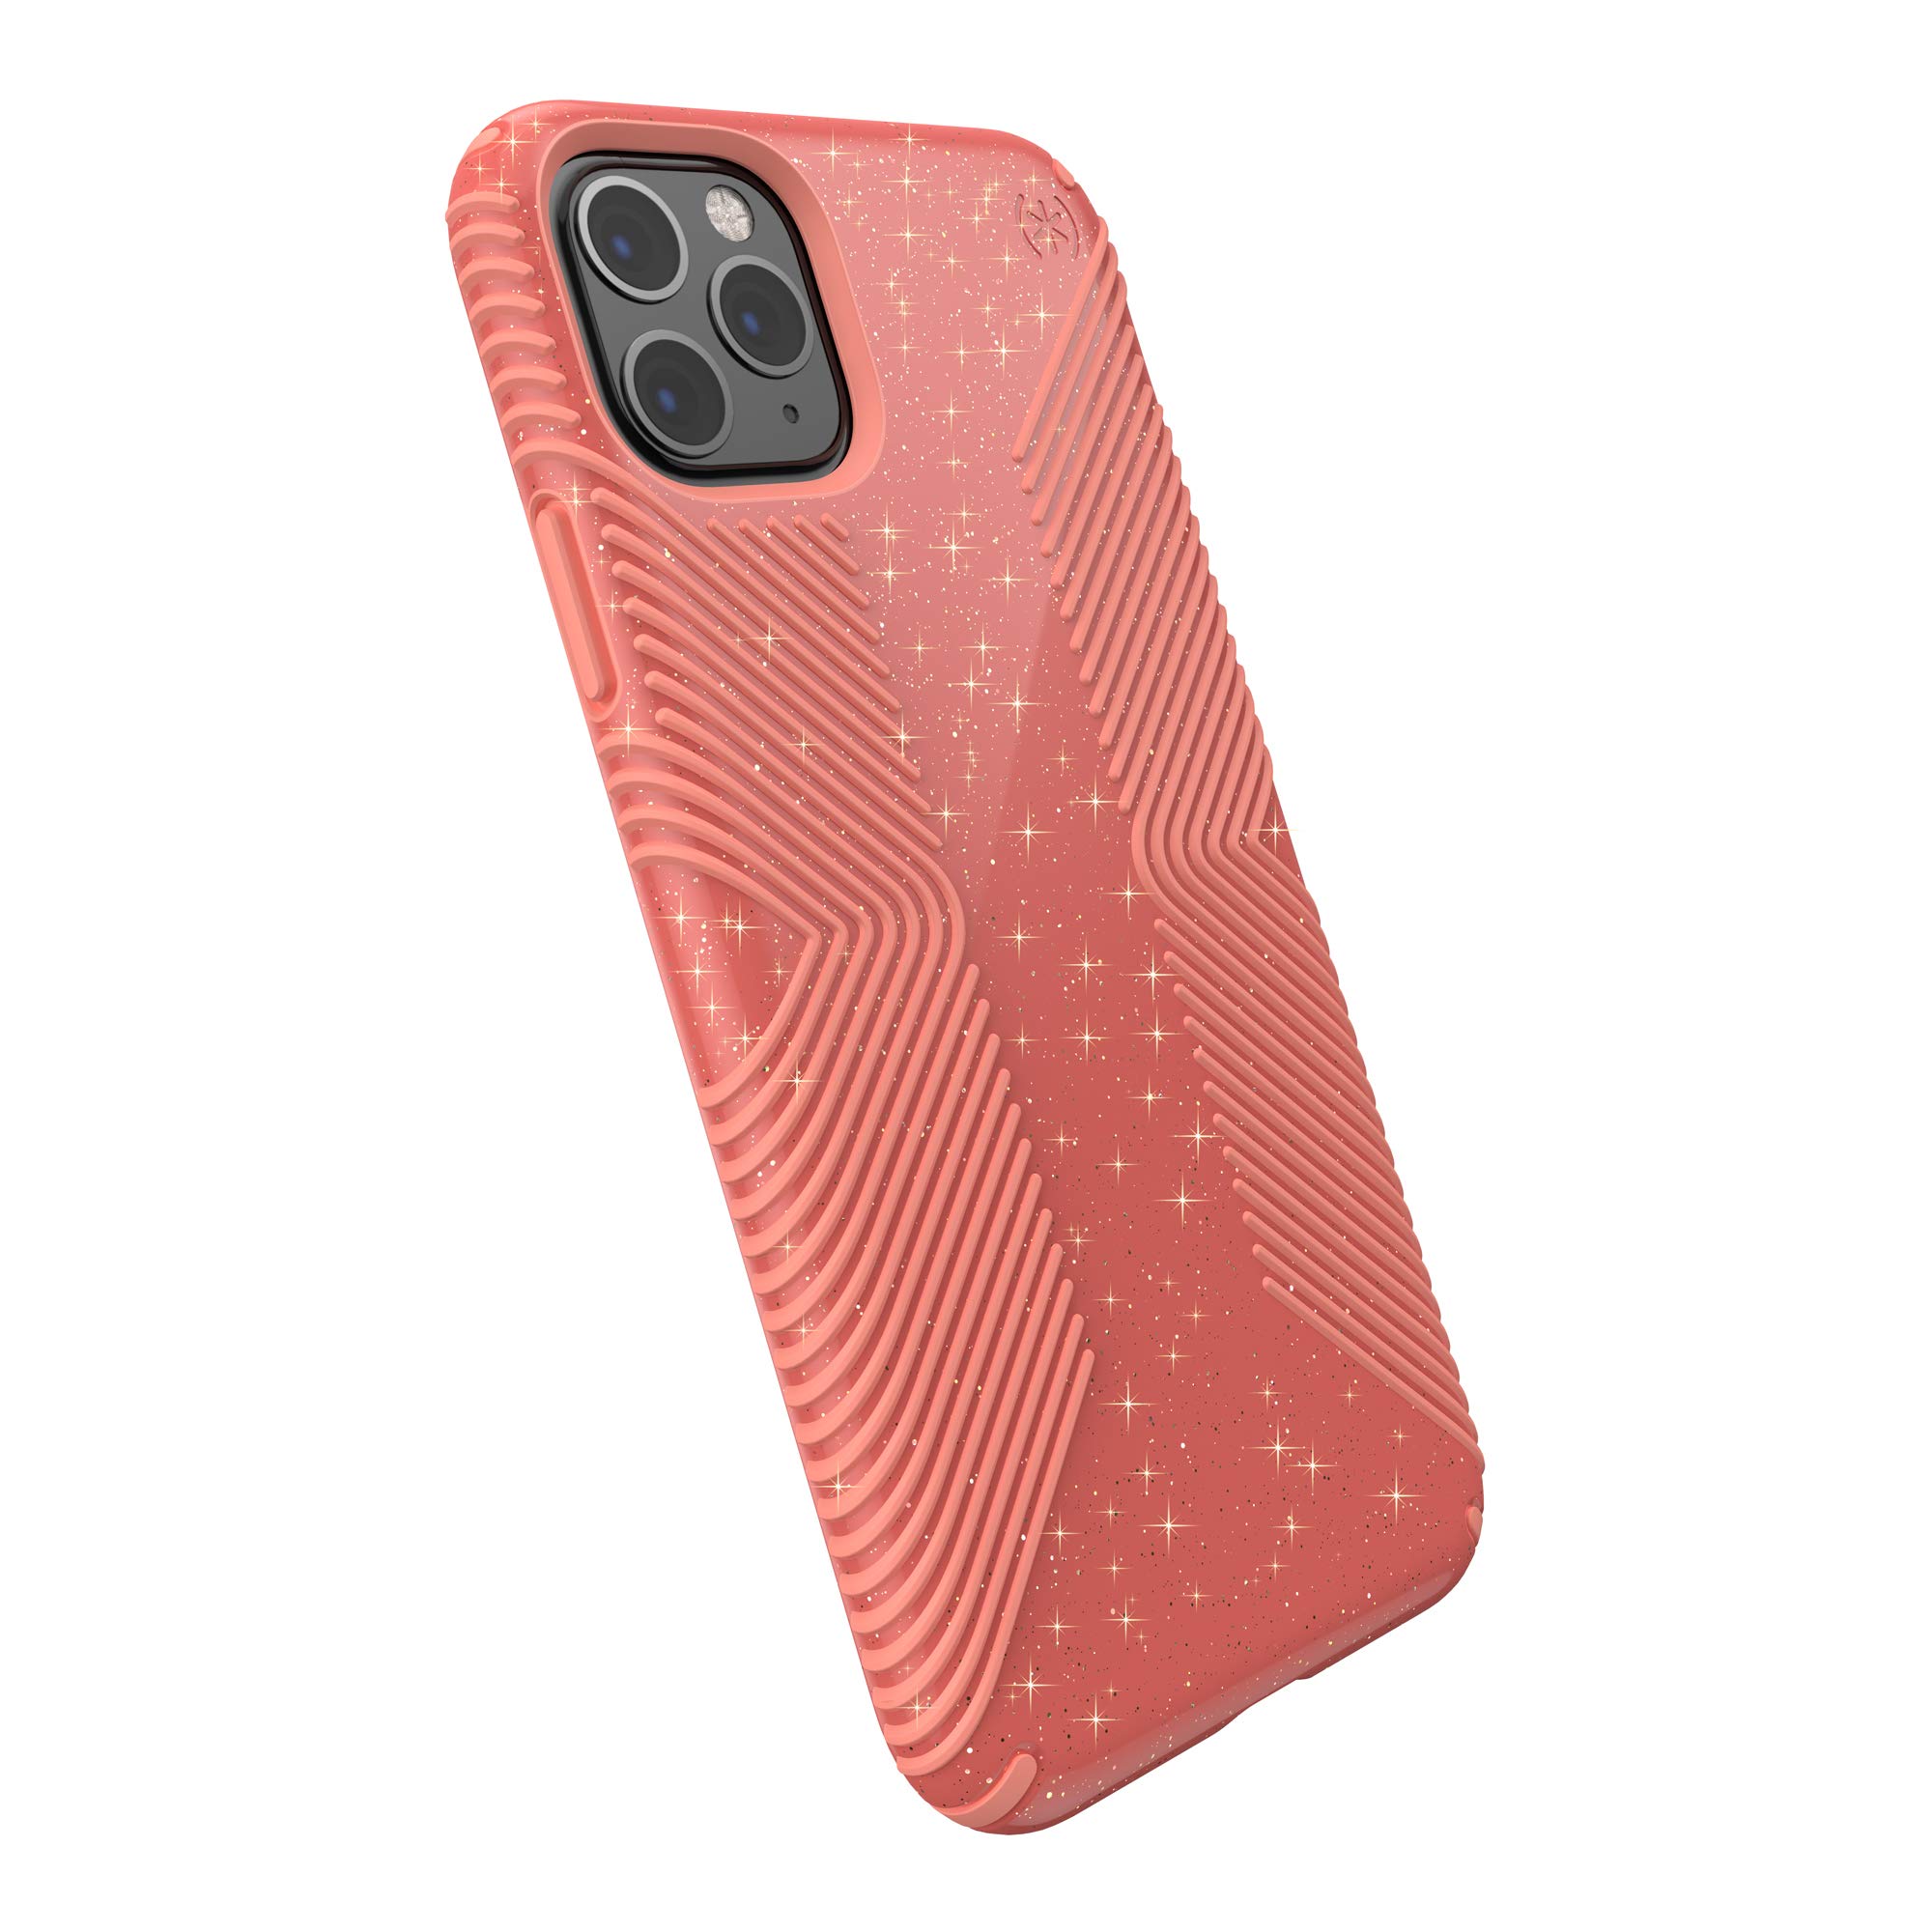 Speck Products Presidio Grip + Glitter iPhone 11 PRO Max Case, Lilypink Glitter/Papaya Pink (130036-8533)